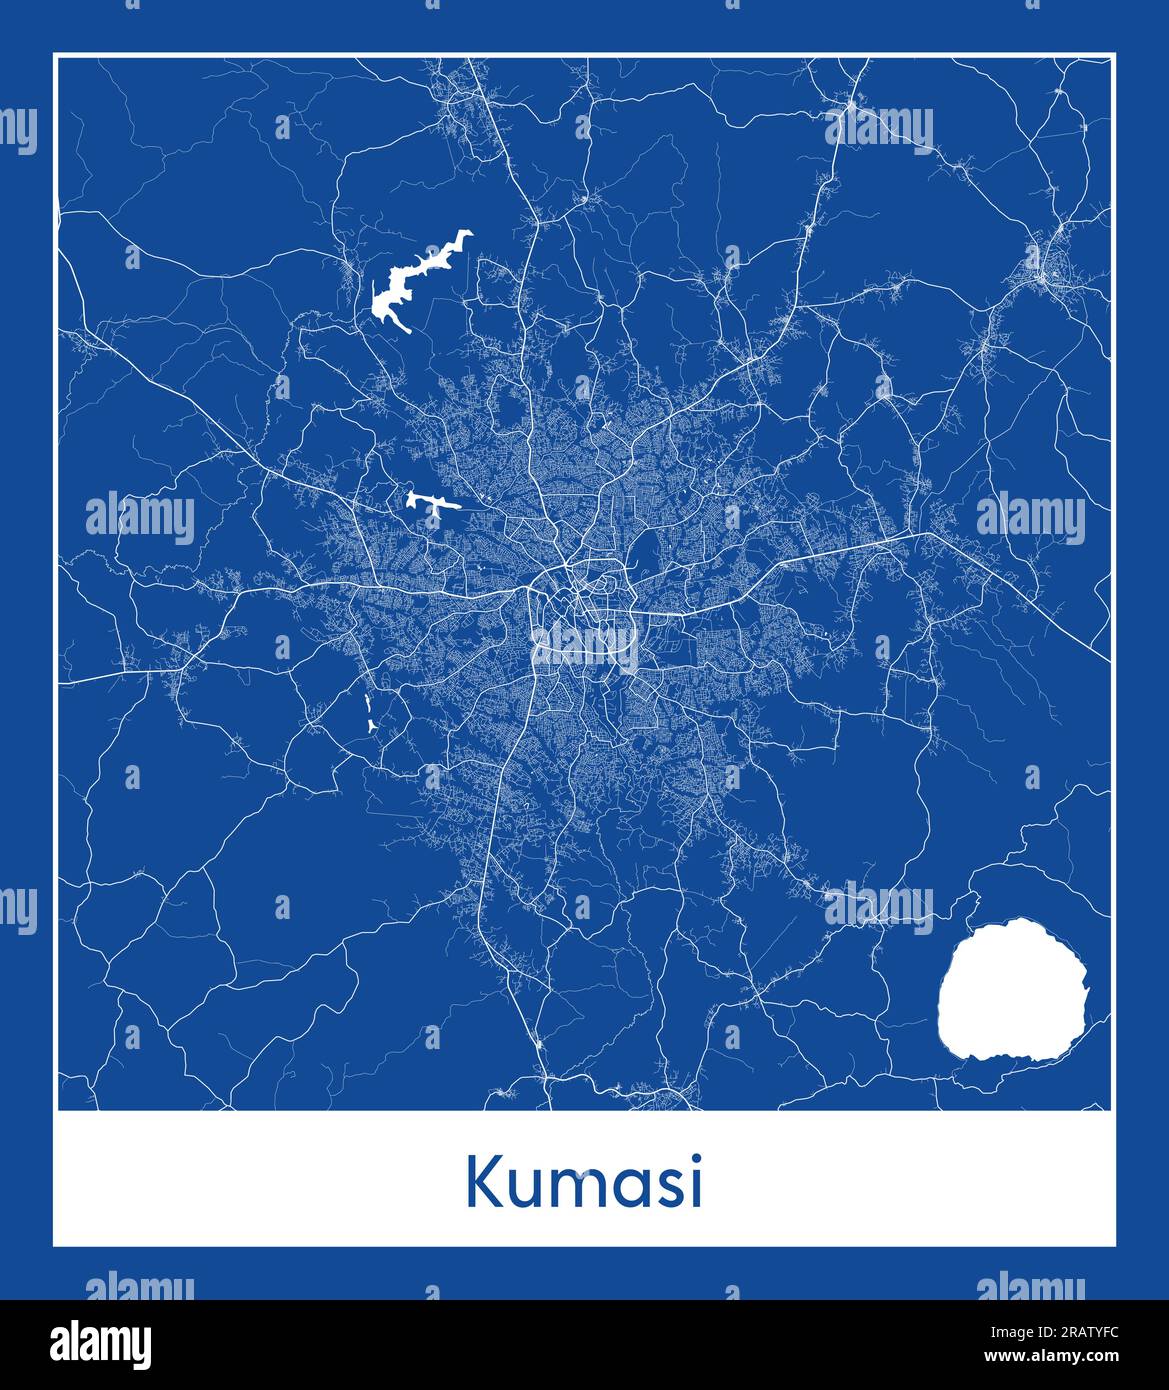 Kumasi Ghana Africa City map blue print vector illustration Stock Vector